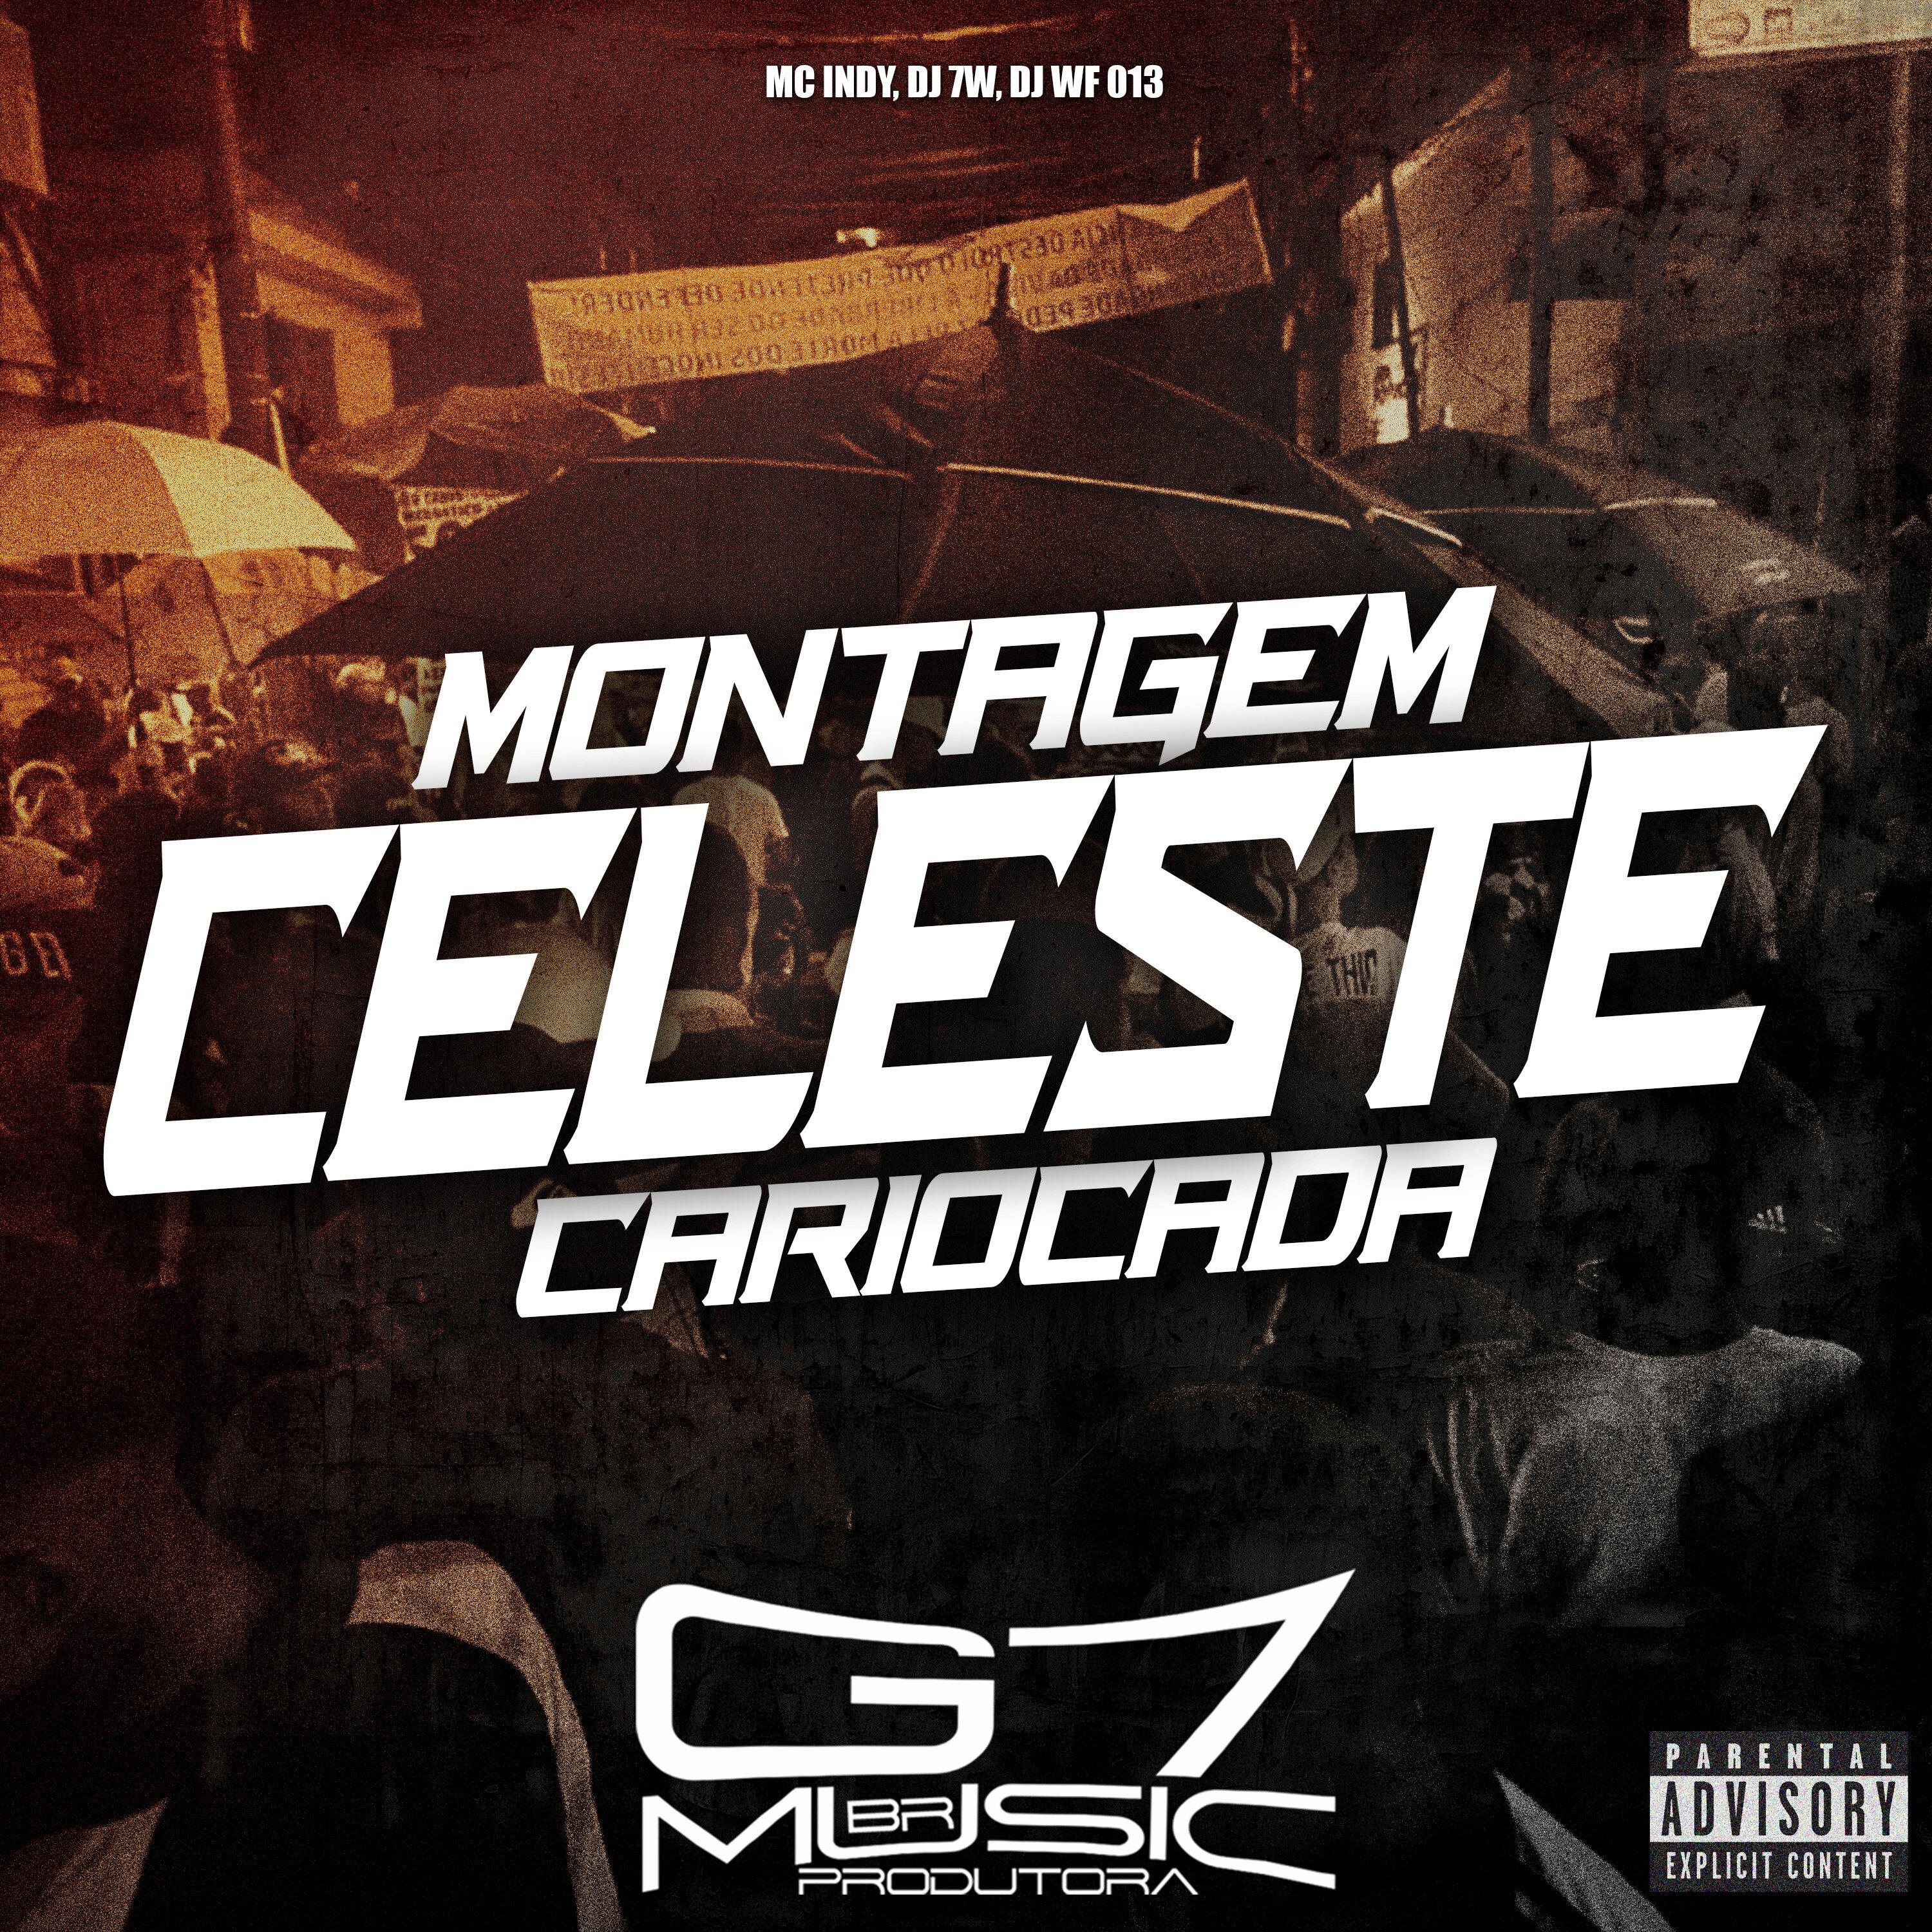 MC INDY - Montagem Celeste Cariocada